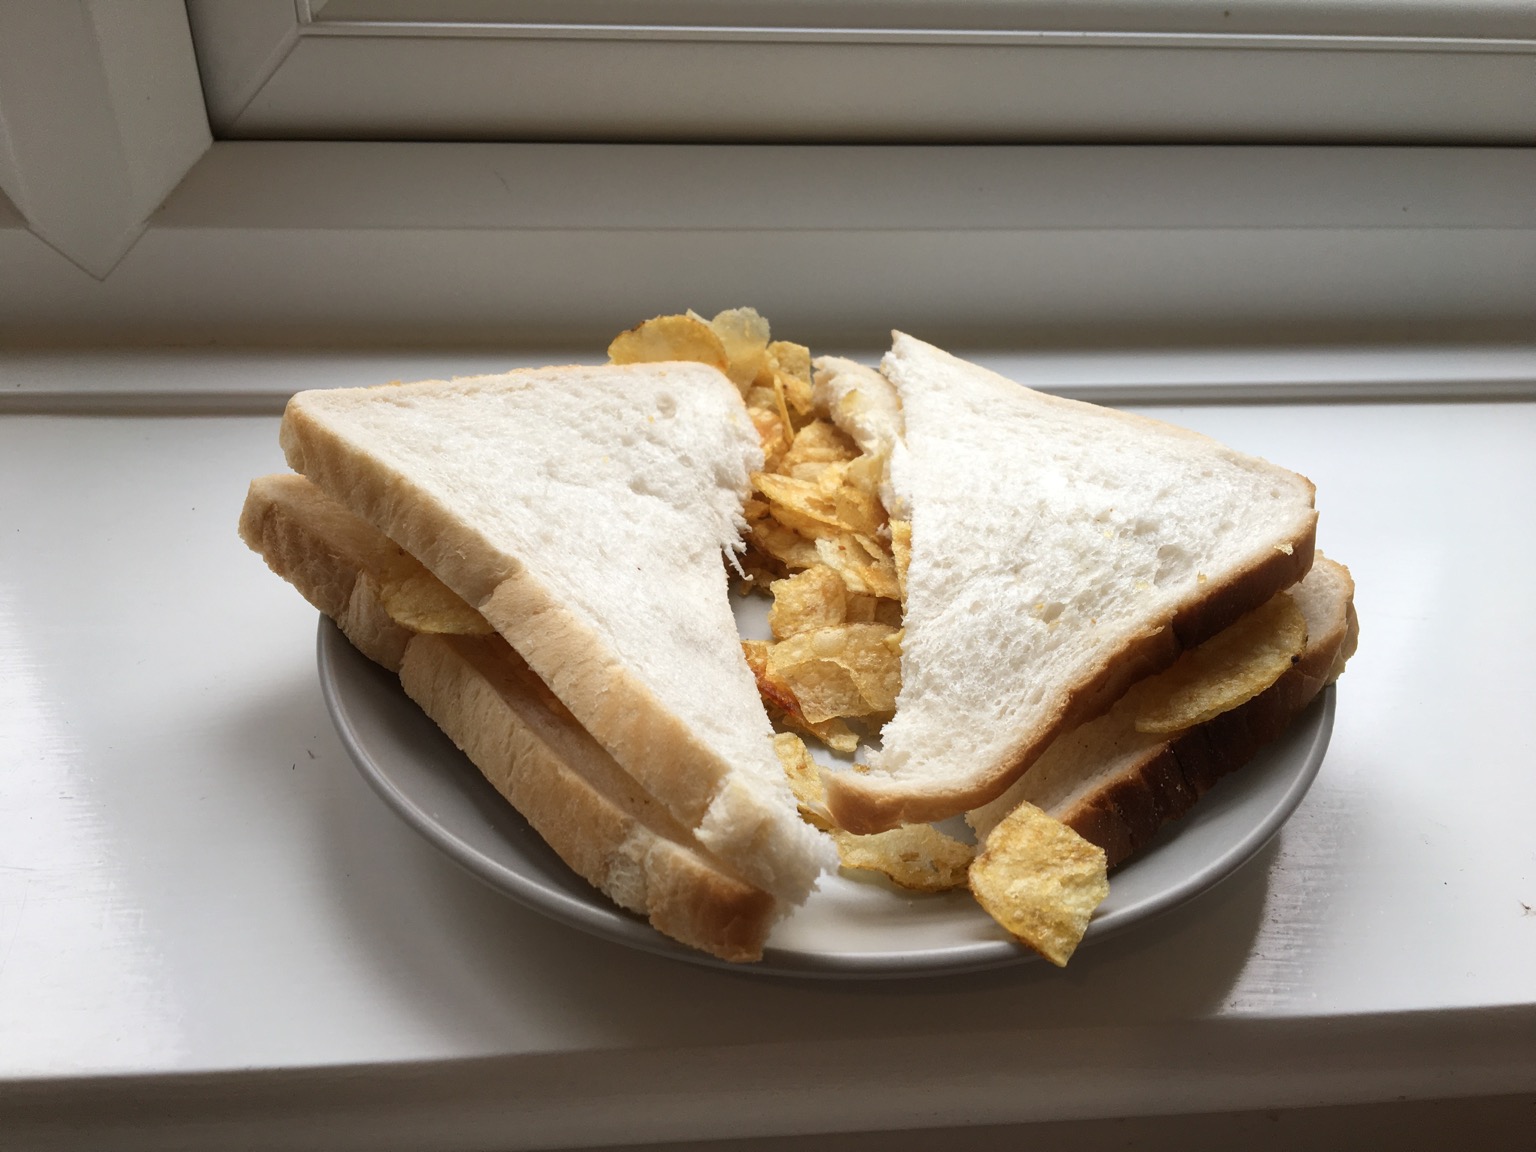 Diagonally-cut crisp sandwich on a windowsill